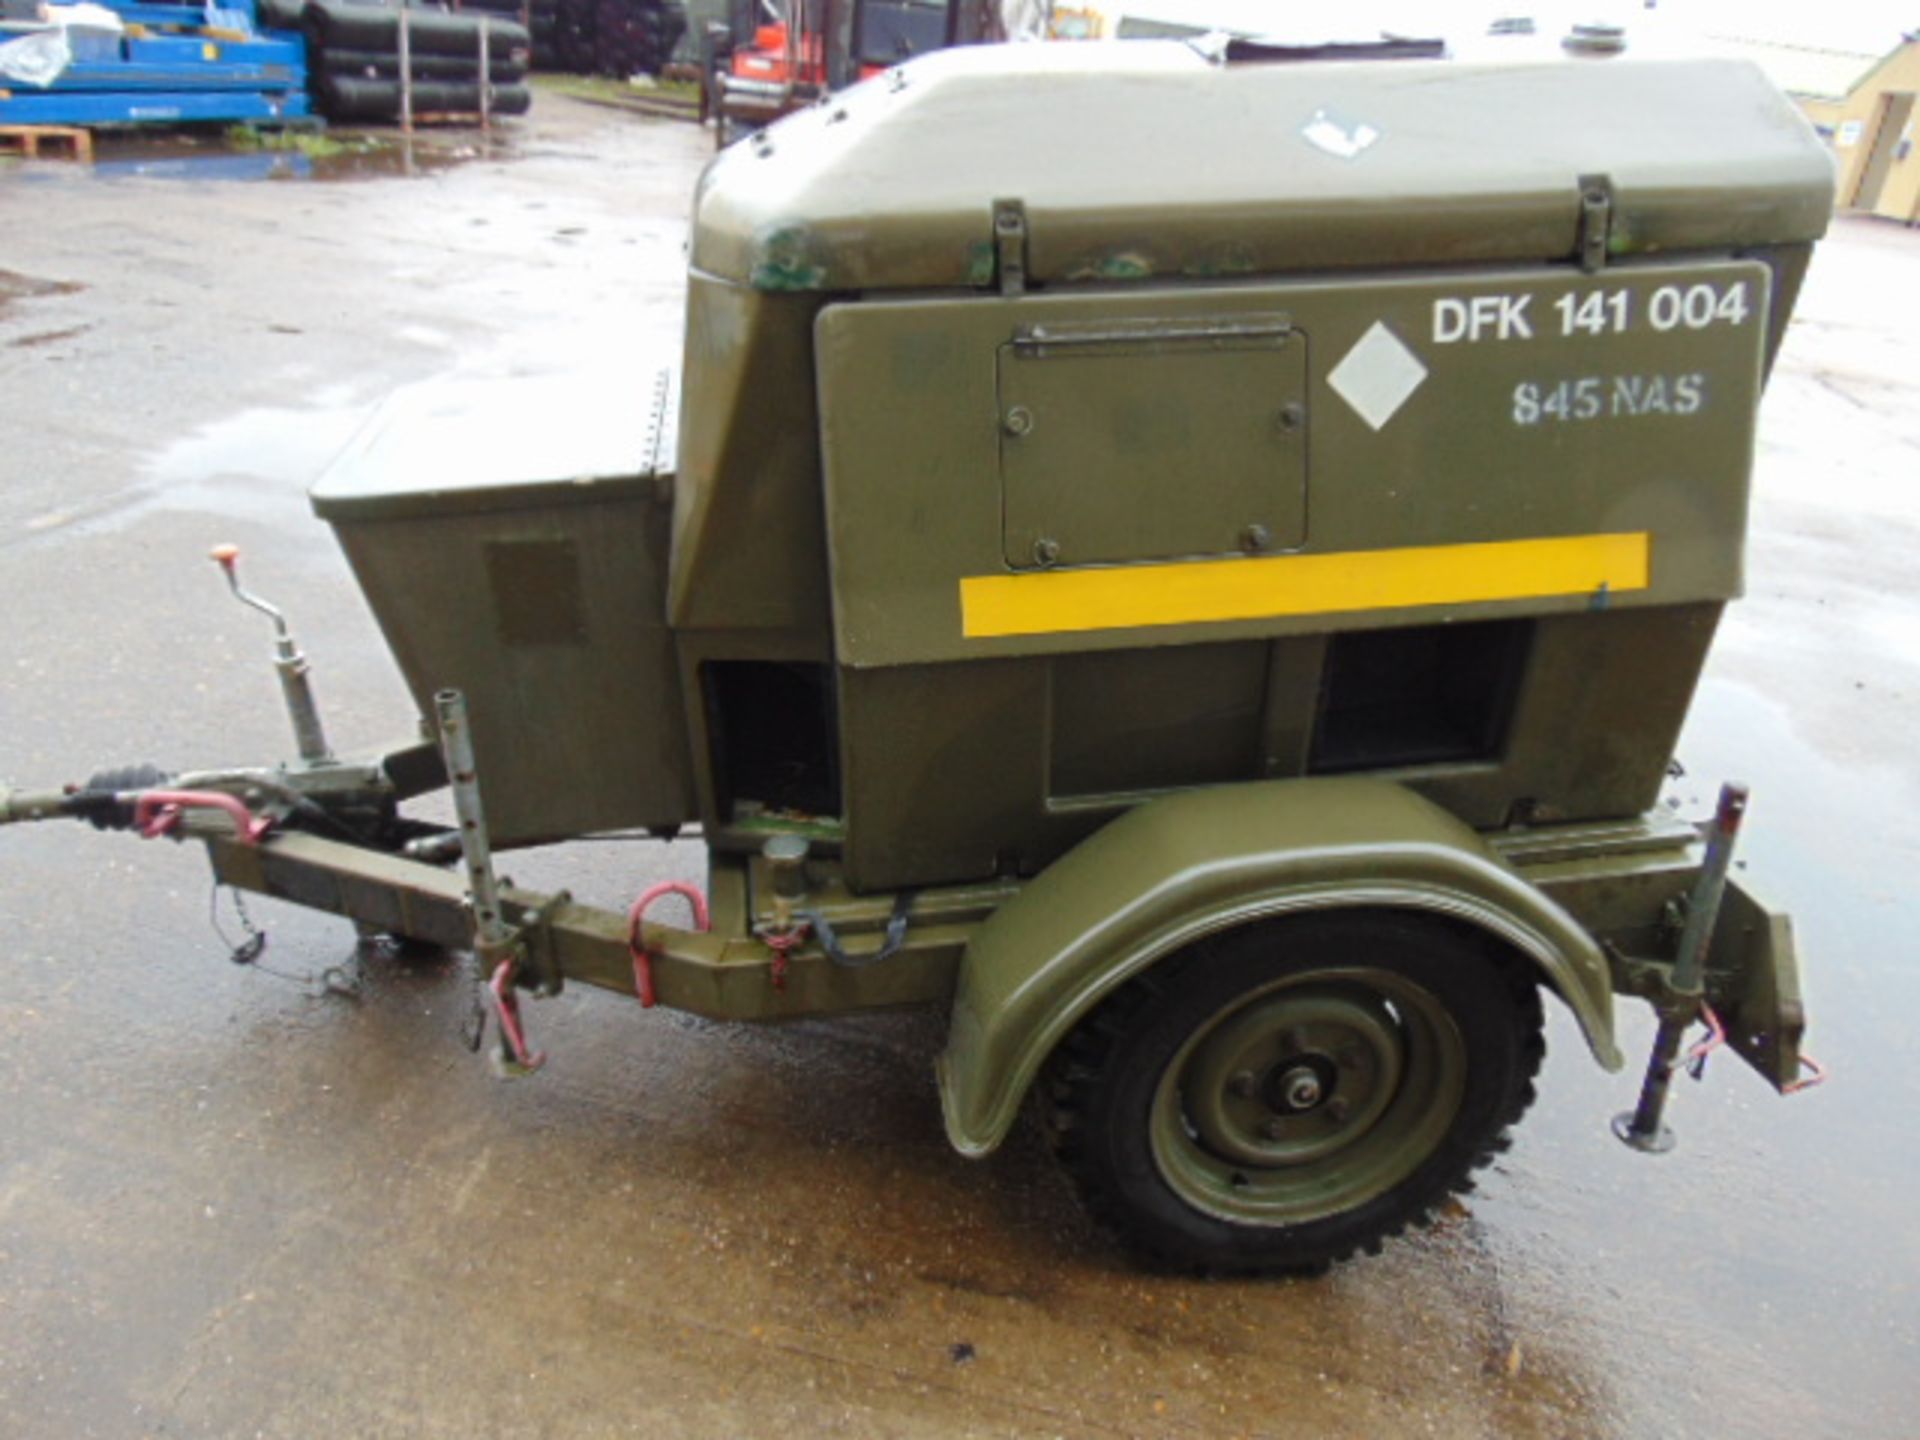 Ex Uk Royal Air Force Trailer Mounted 25 KVA Generator - Image 3 of 12